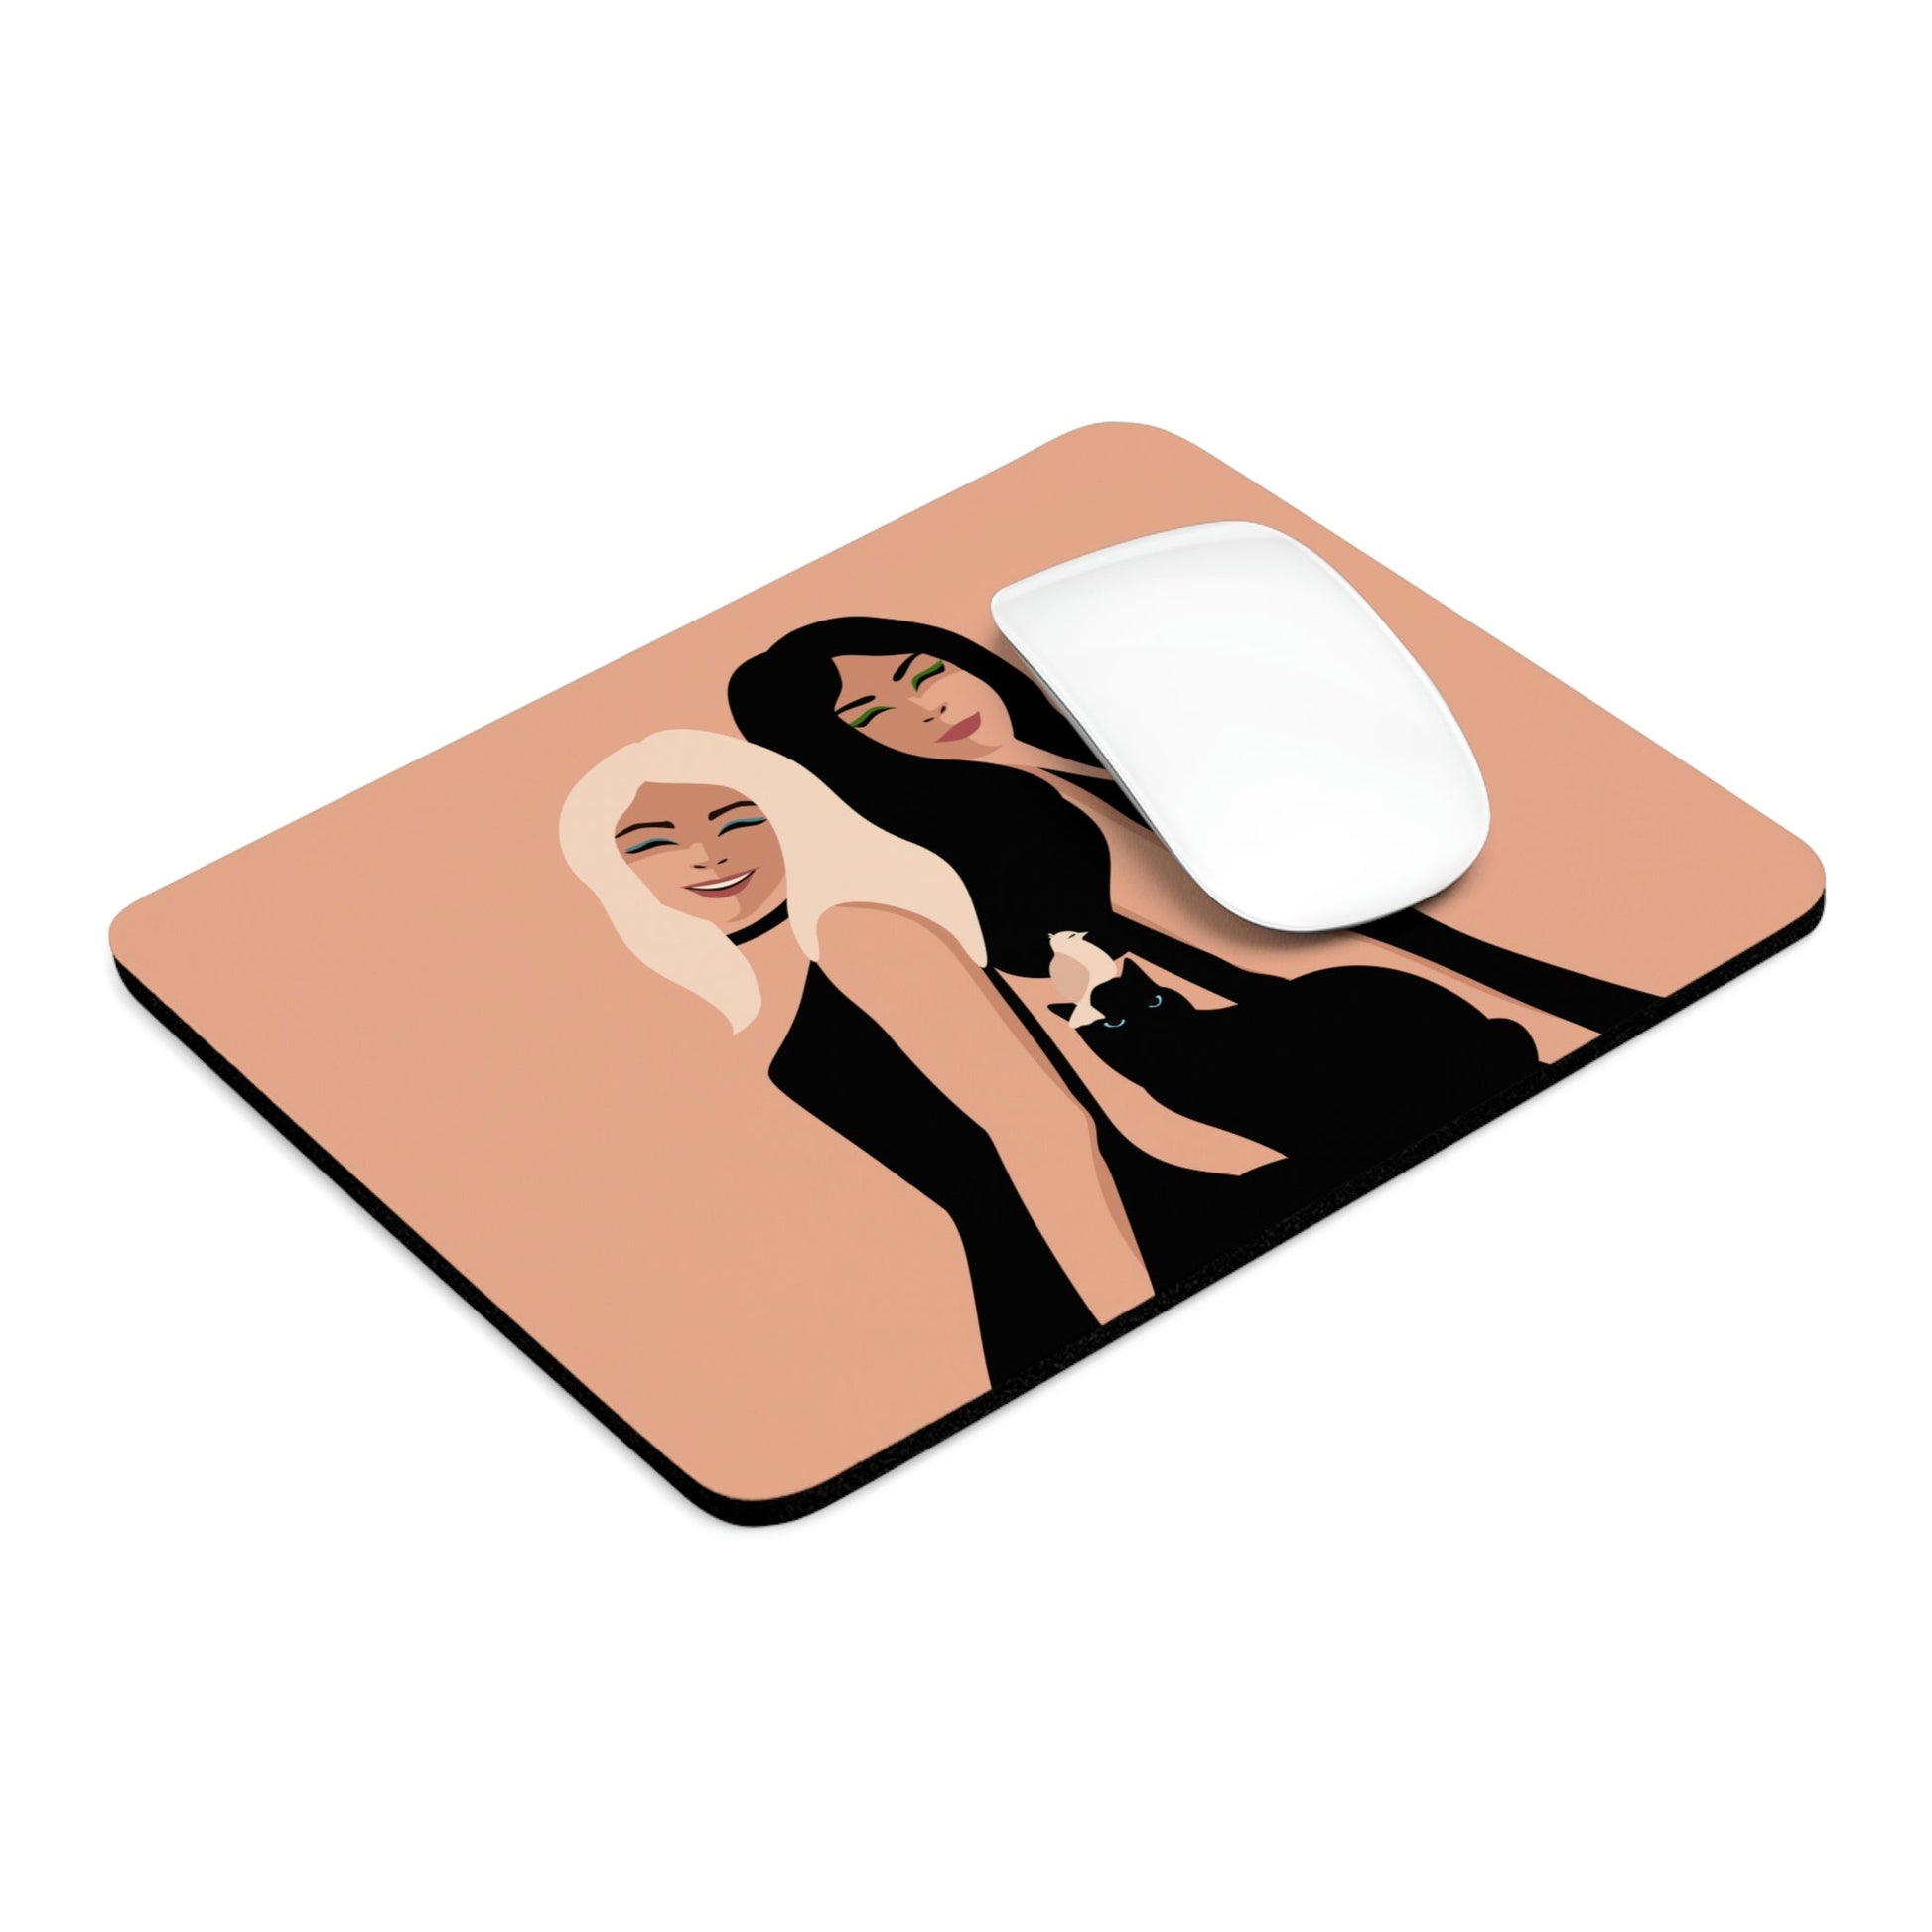 Women With Black Cat and Bird Ergonomic Non-slip Creative Design Mouse Pad Ichaku [Perfect Gifts Selection]